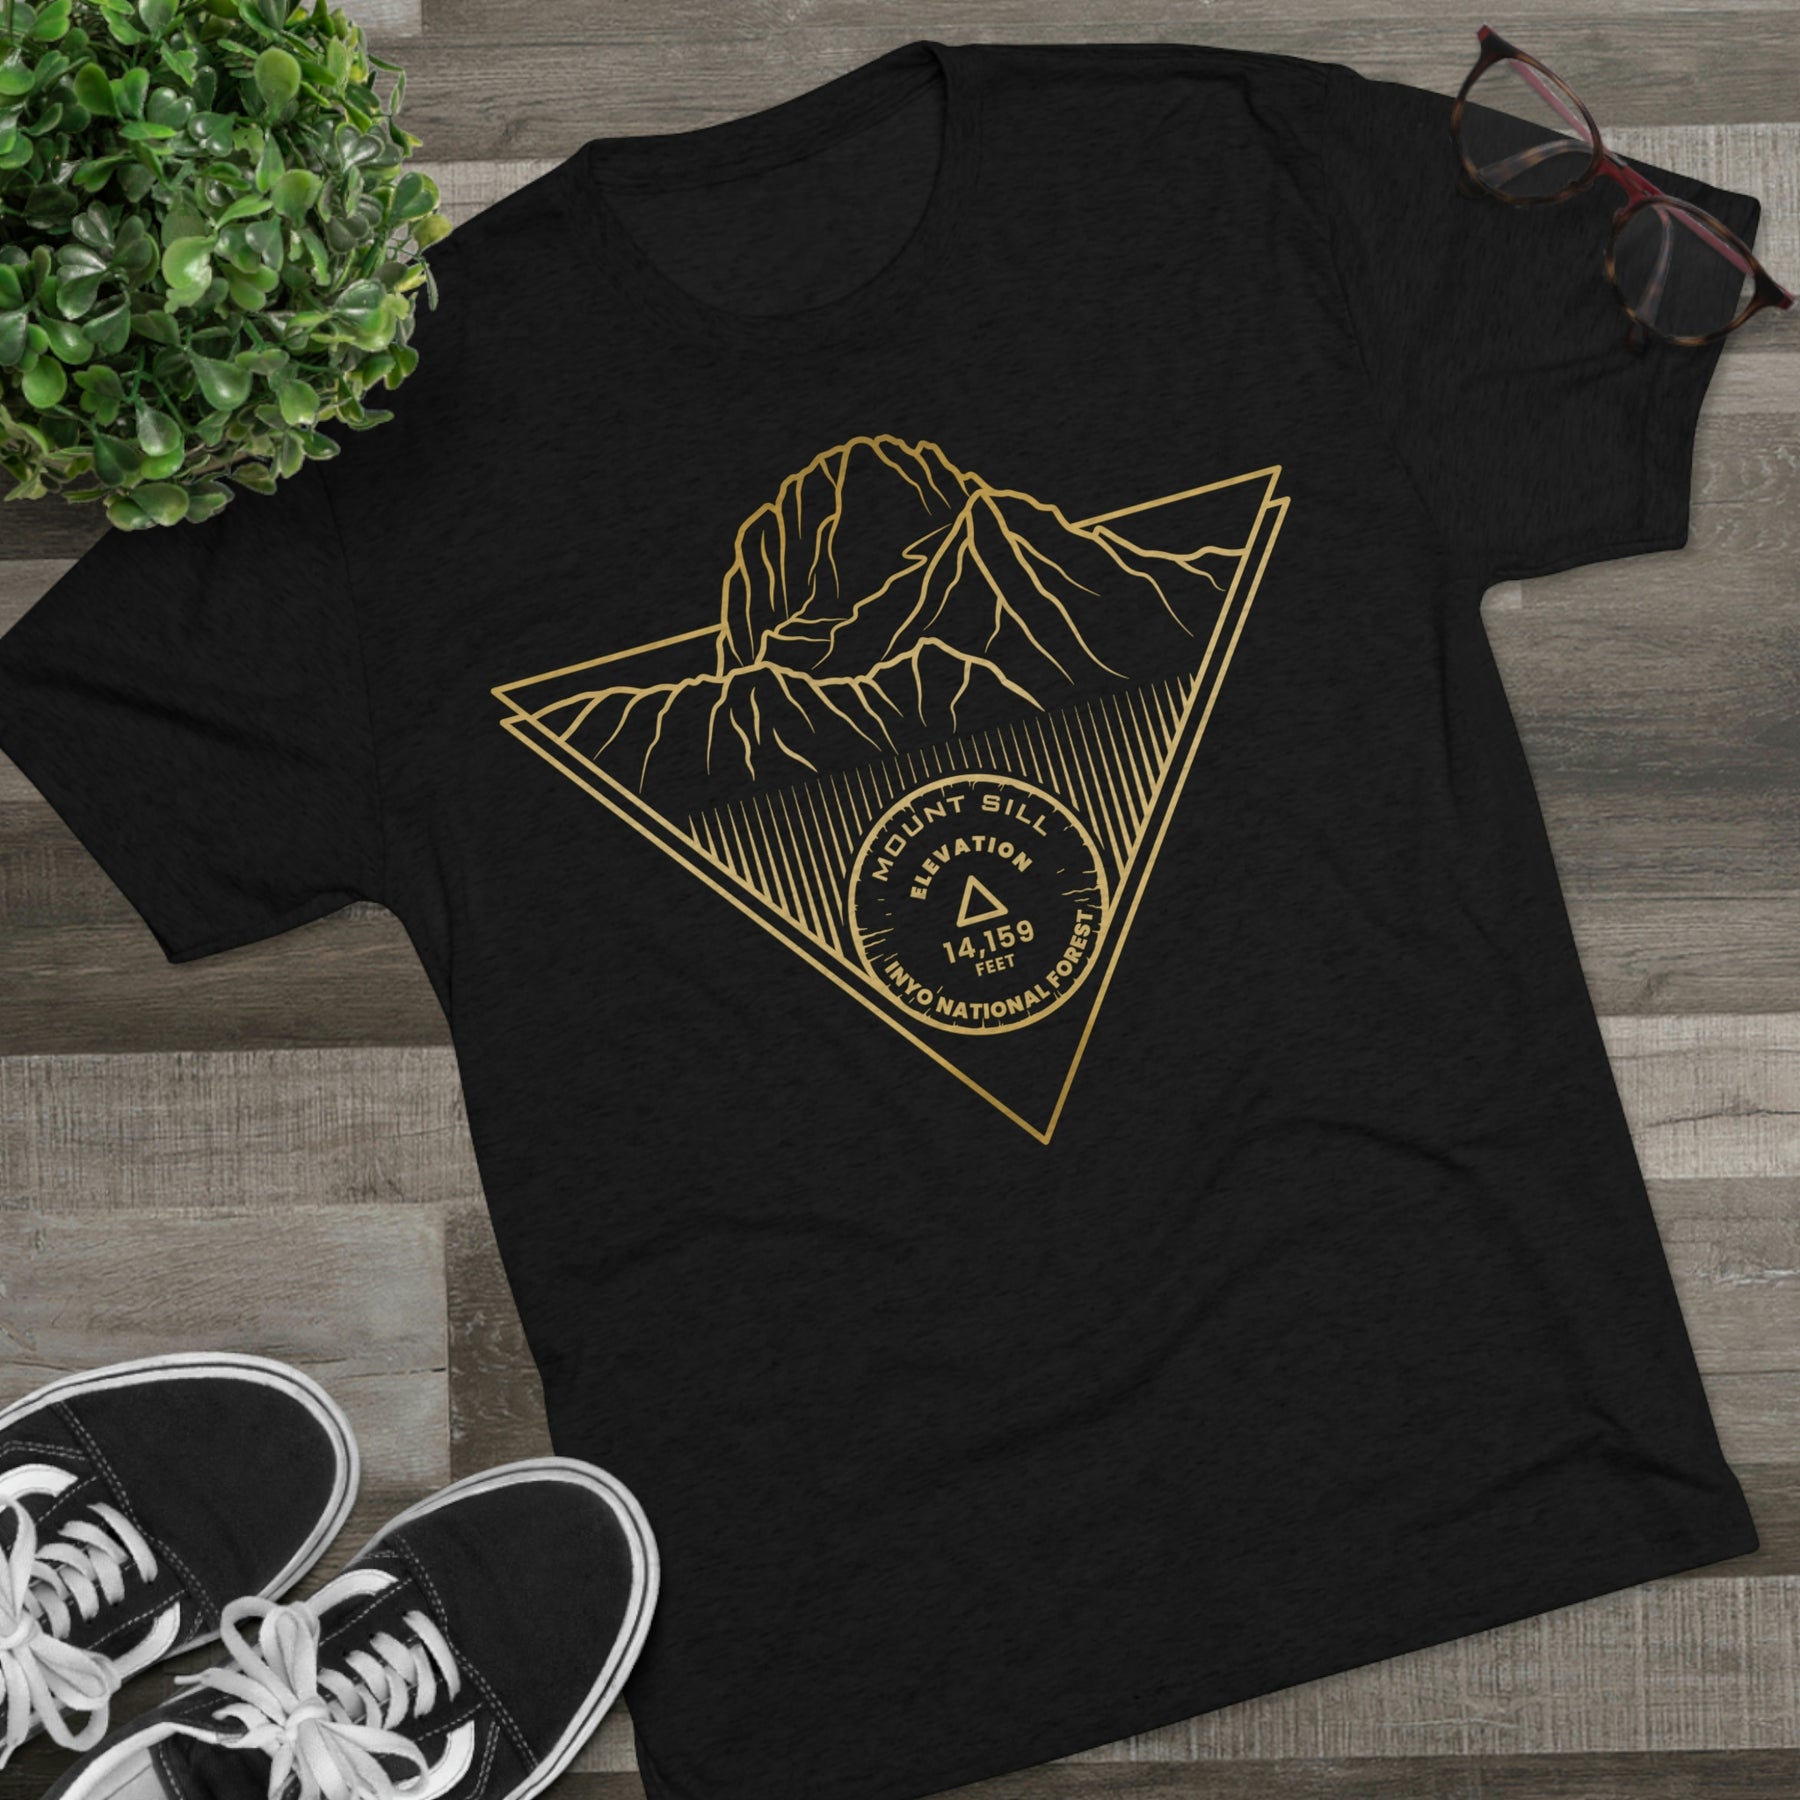 Mount Sill Peak Minimalist Line Art CA 14er Unisex Tri-Blend Crew Tee T Shirt